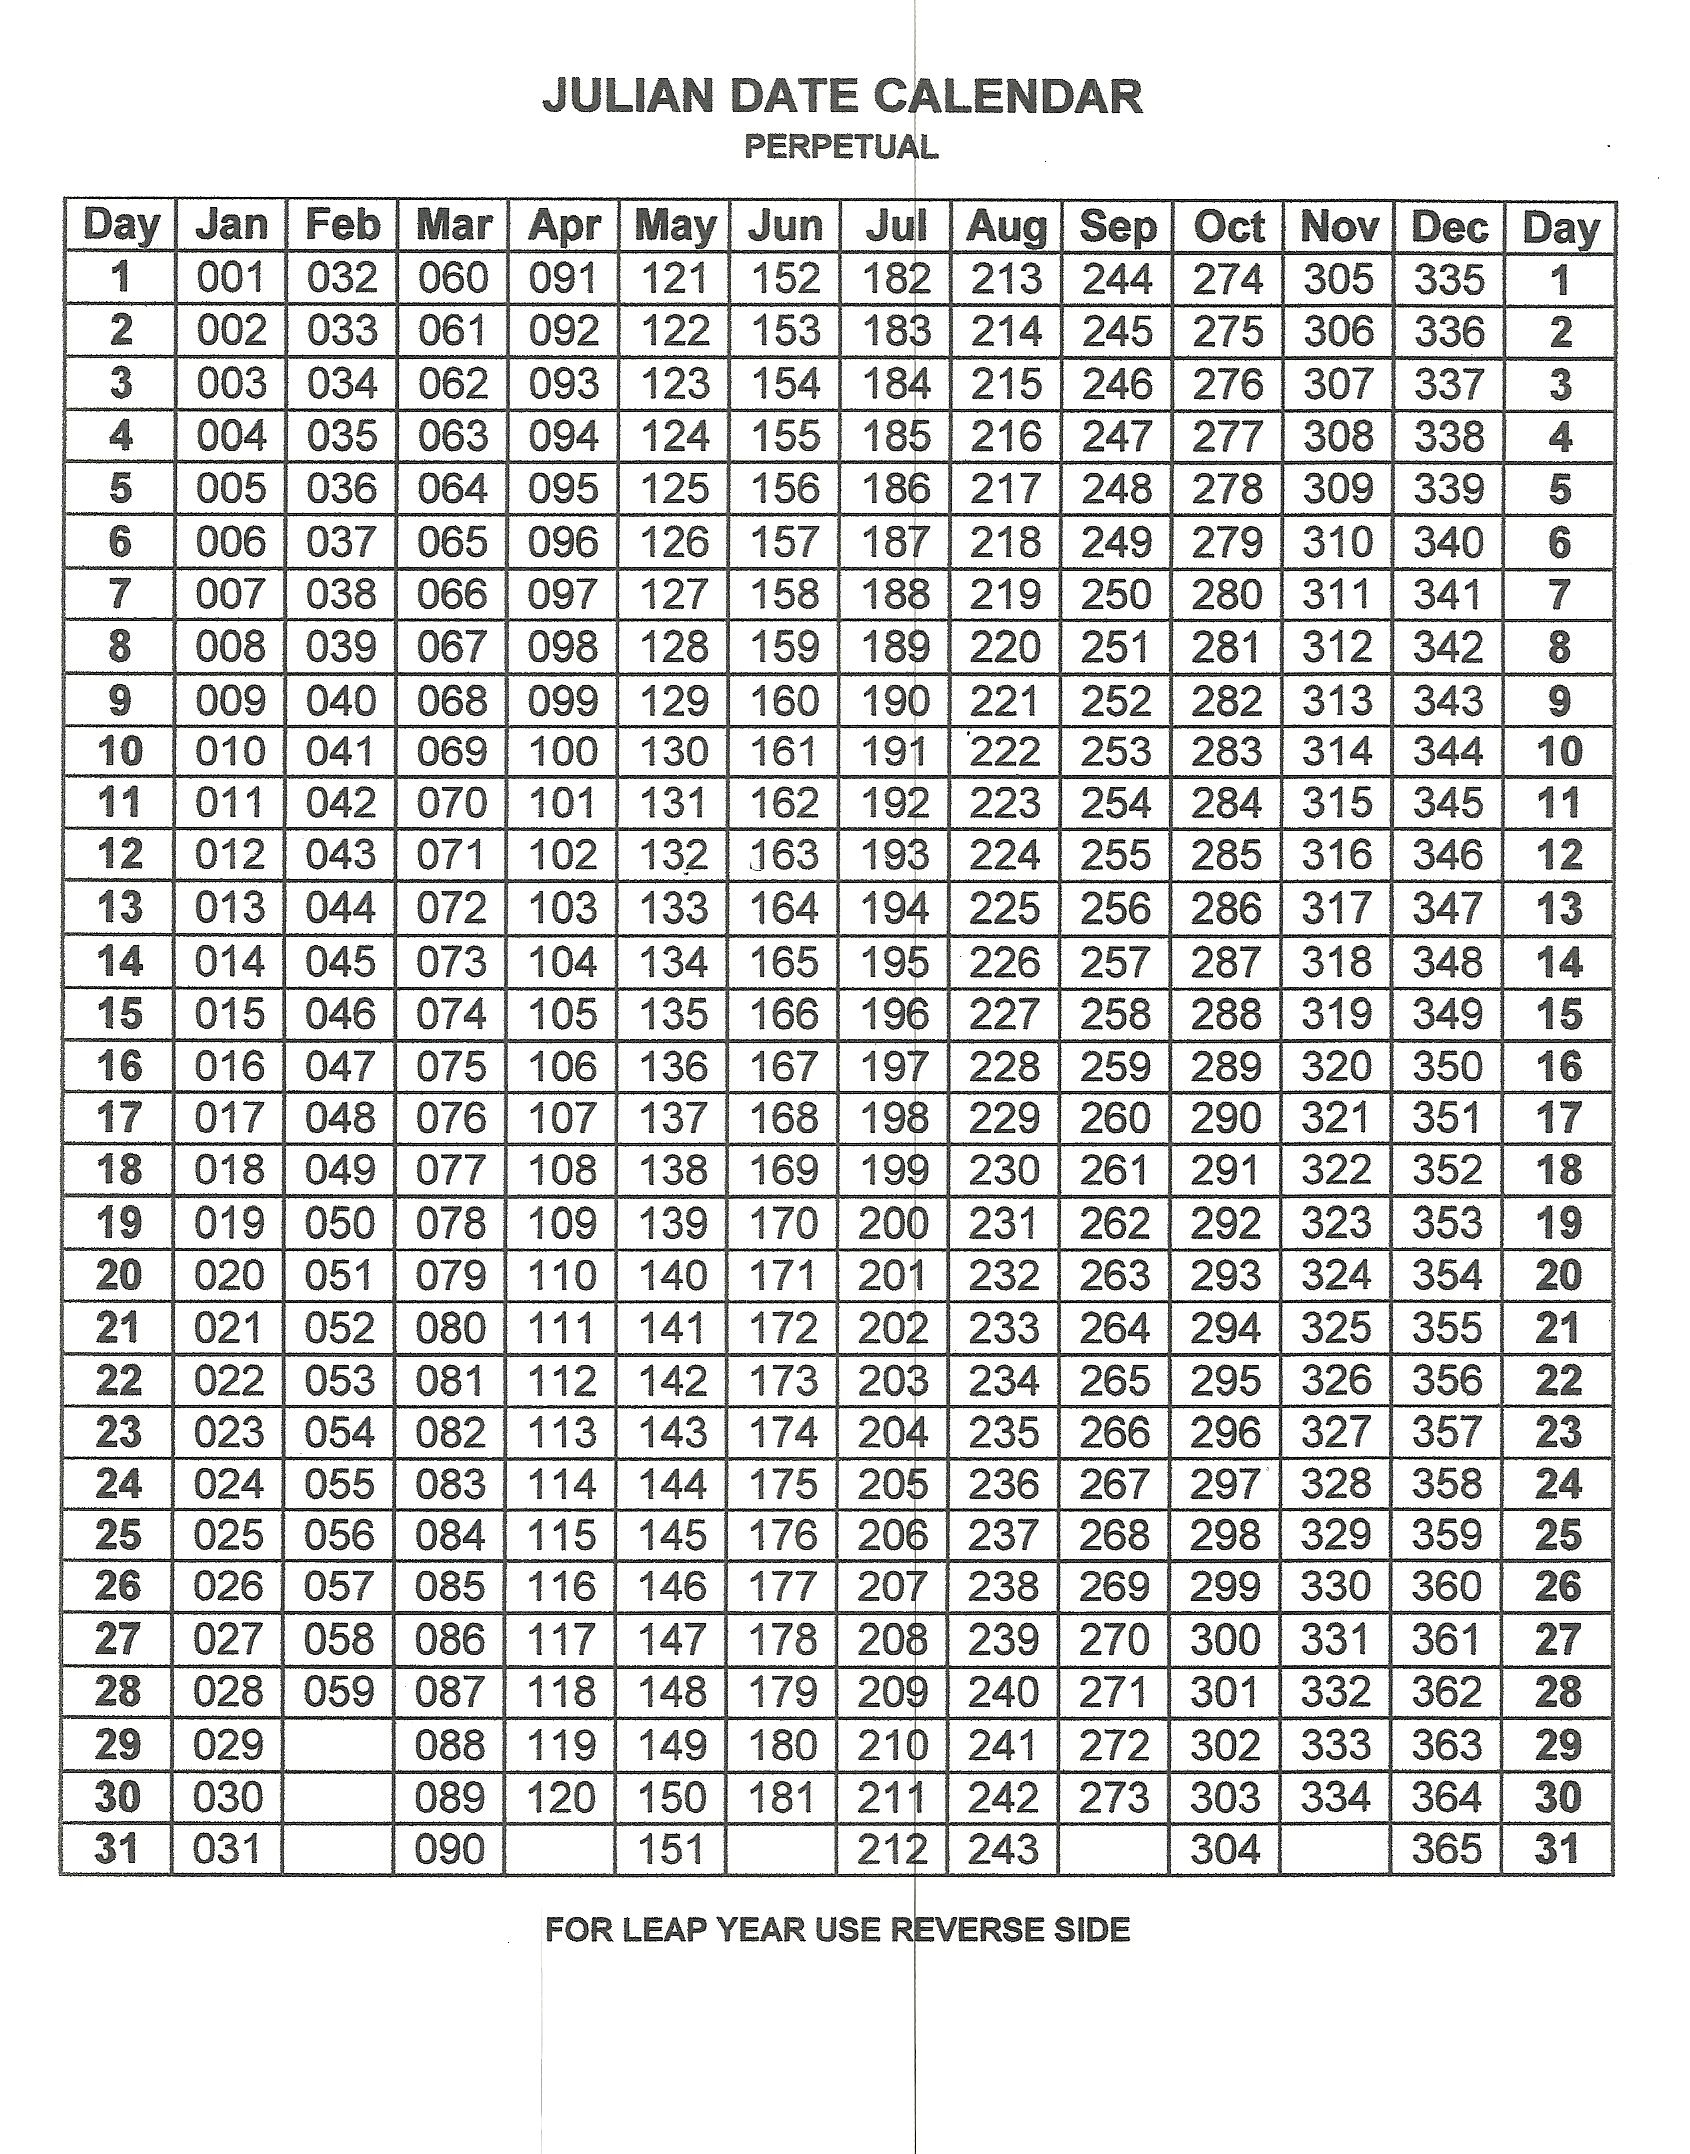 Perpetual Julian Date Calendar | Julian Dates, Calendar regarding What Is Julian Dates On A Calendar